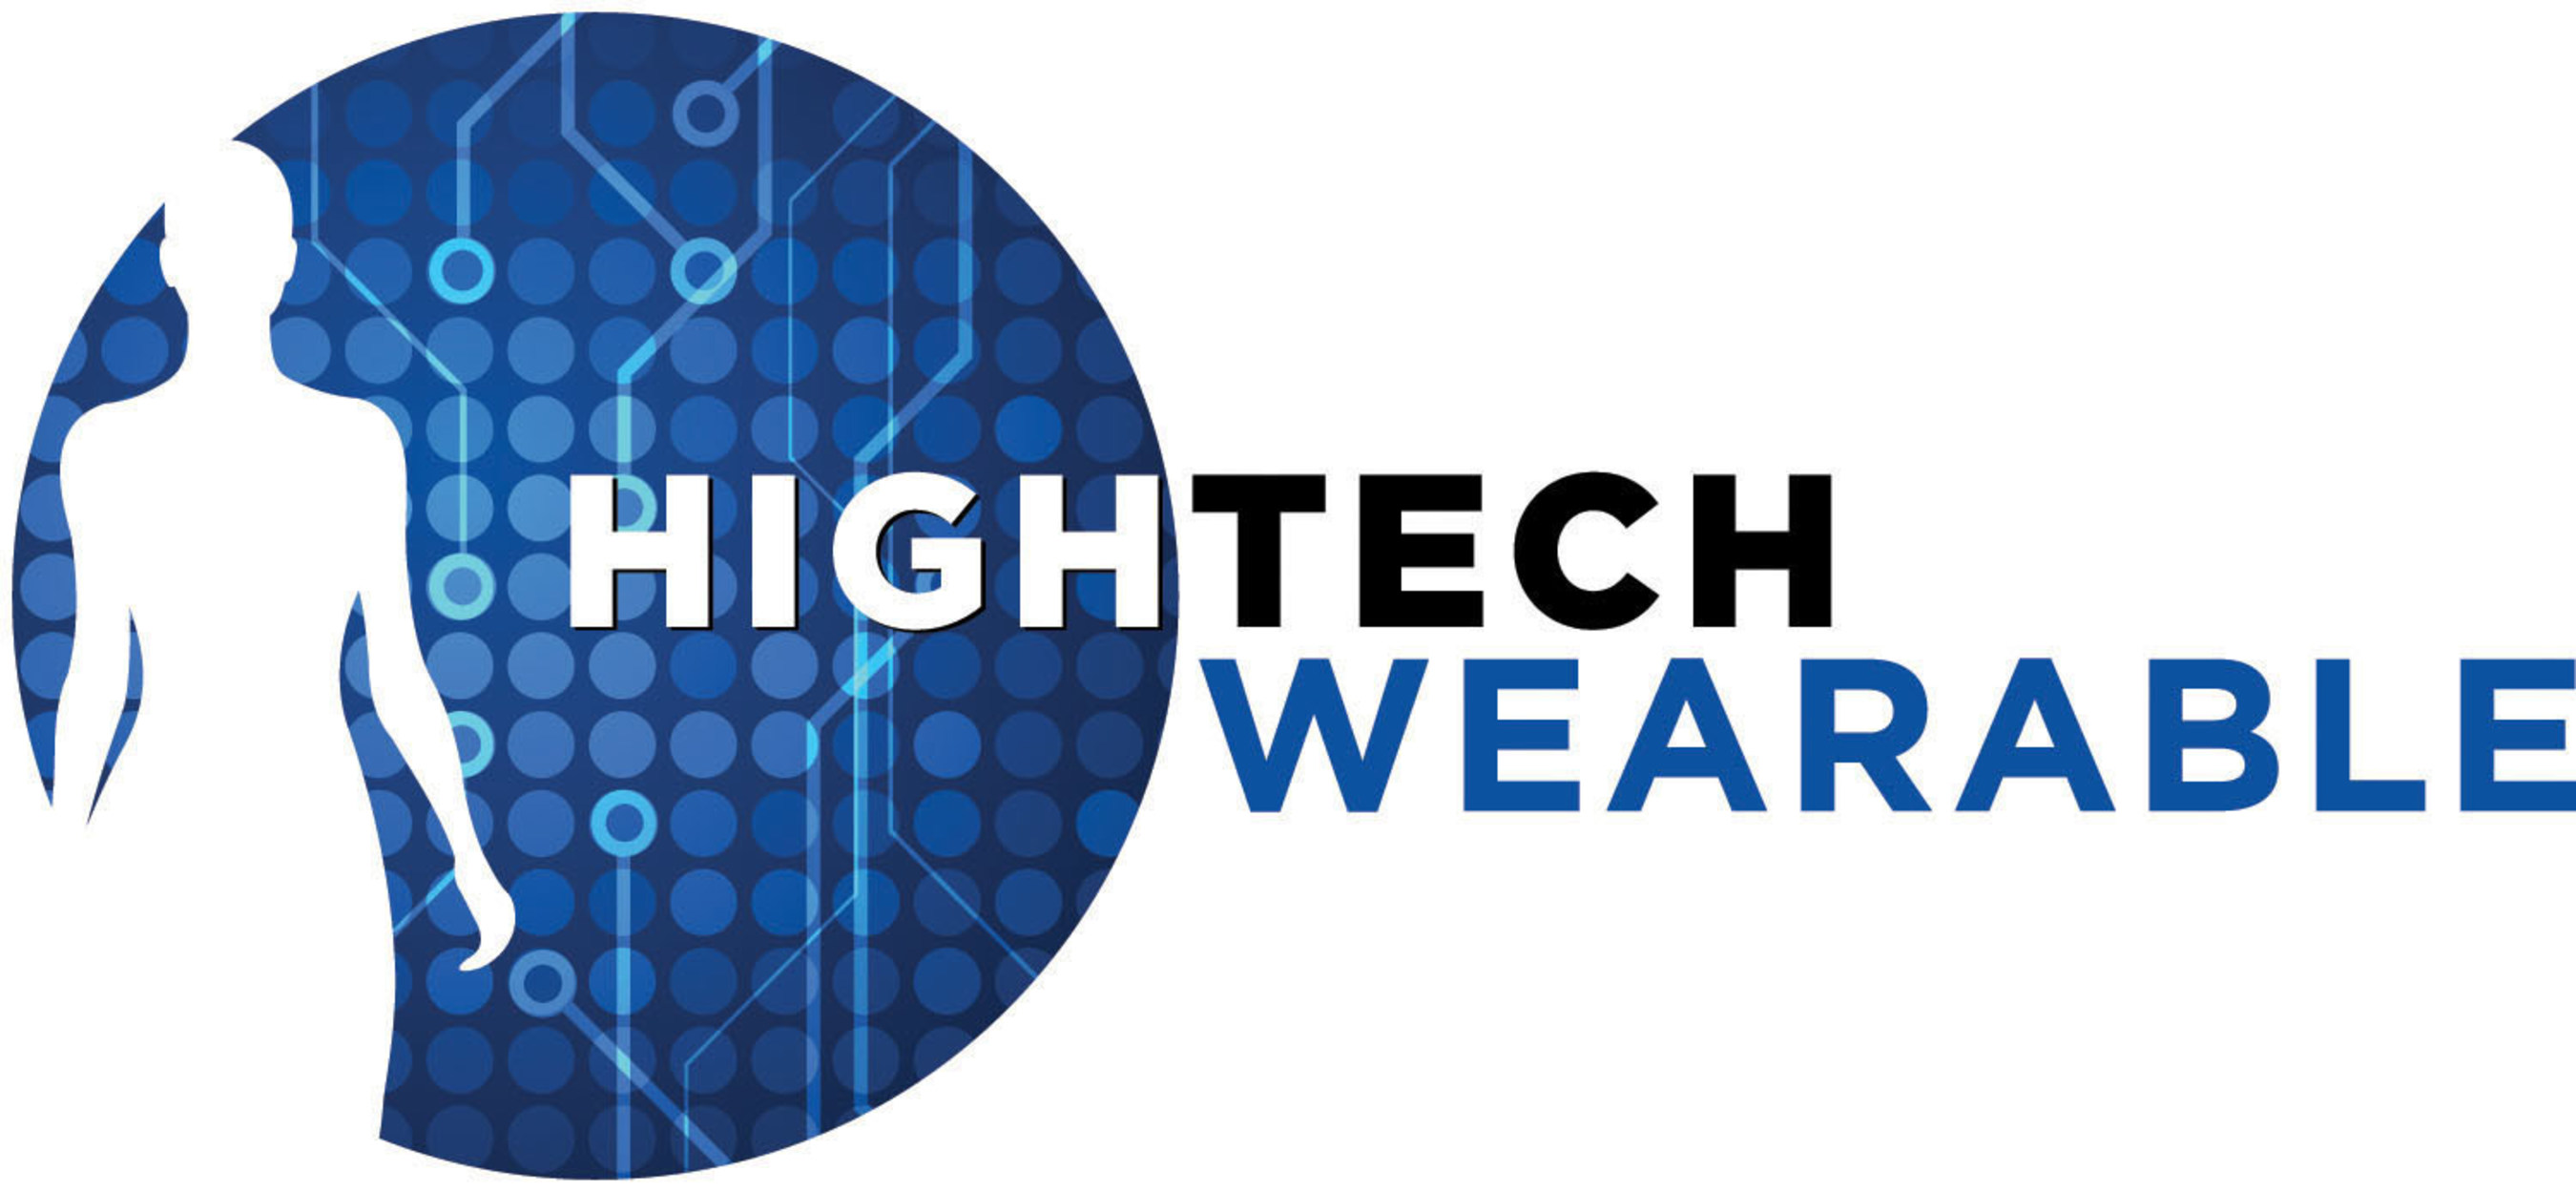 High Tech Wearable logo